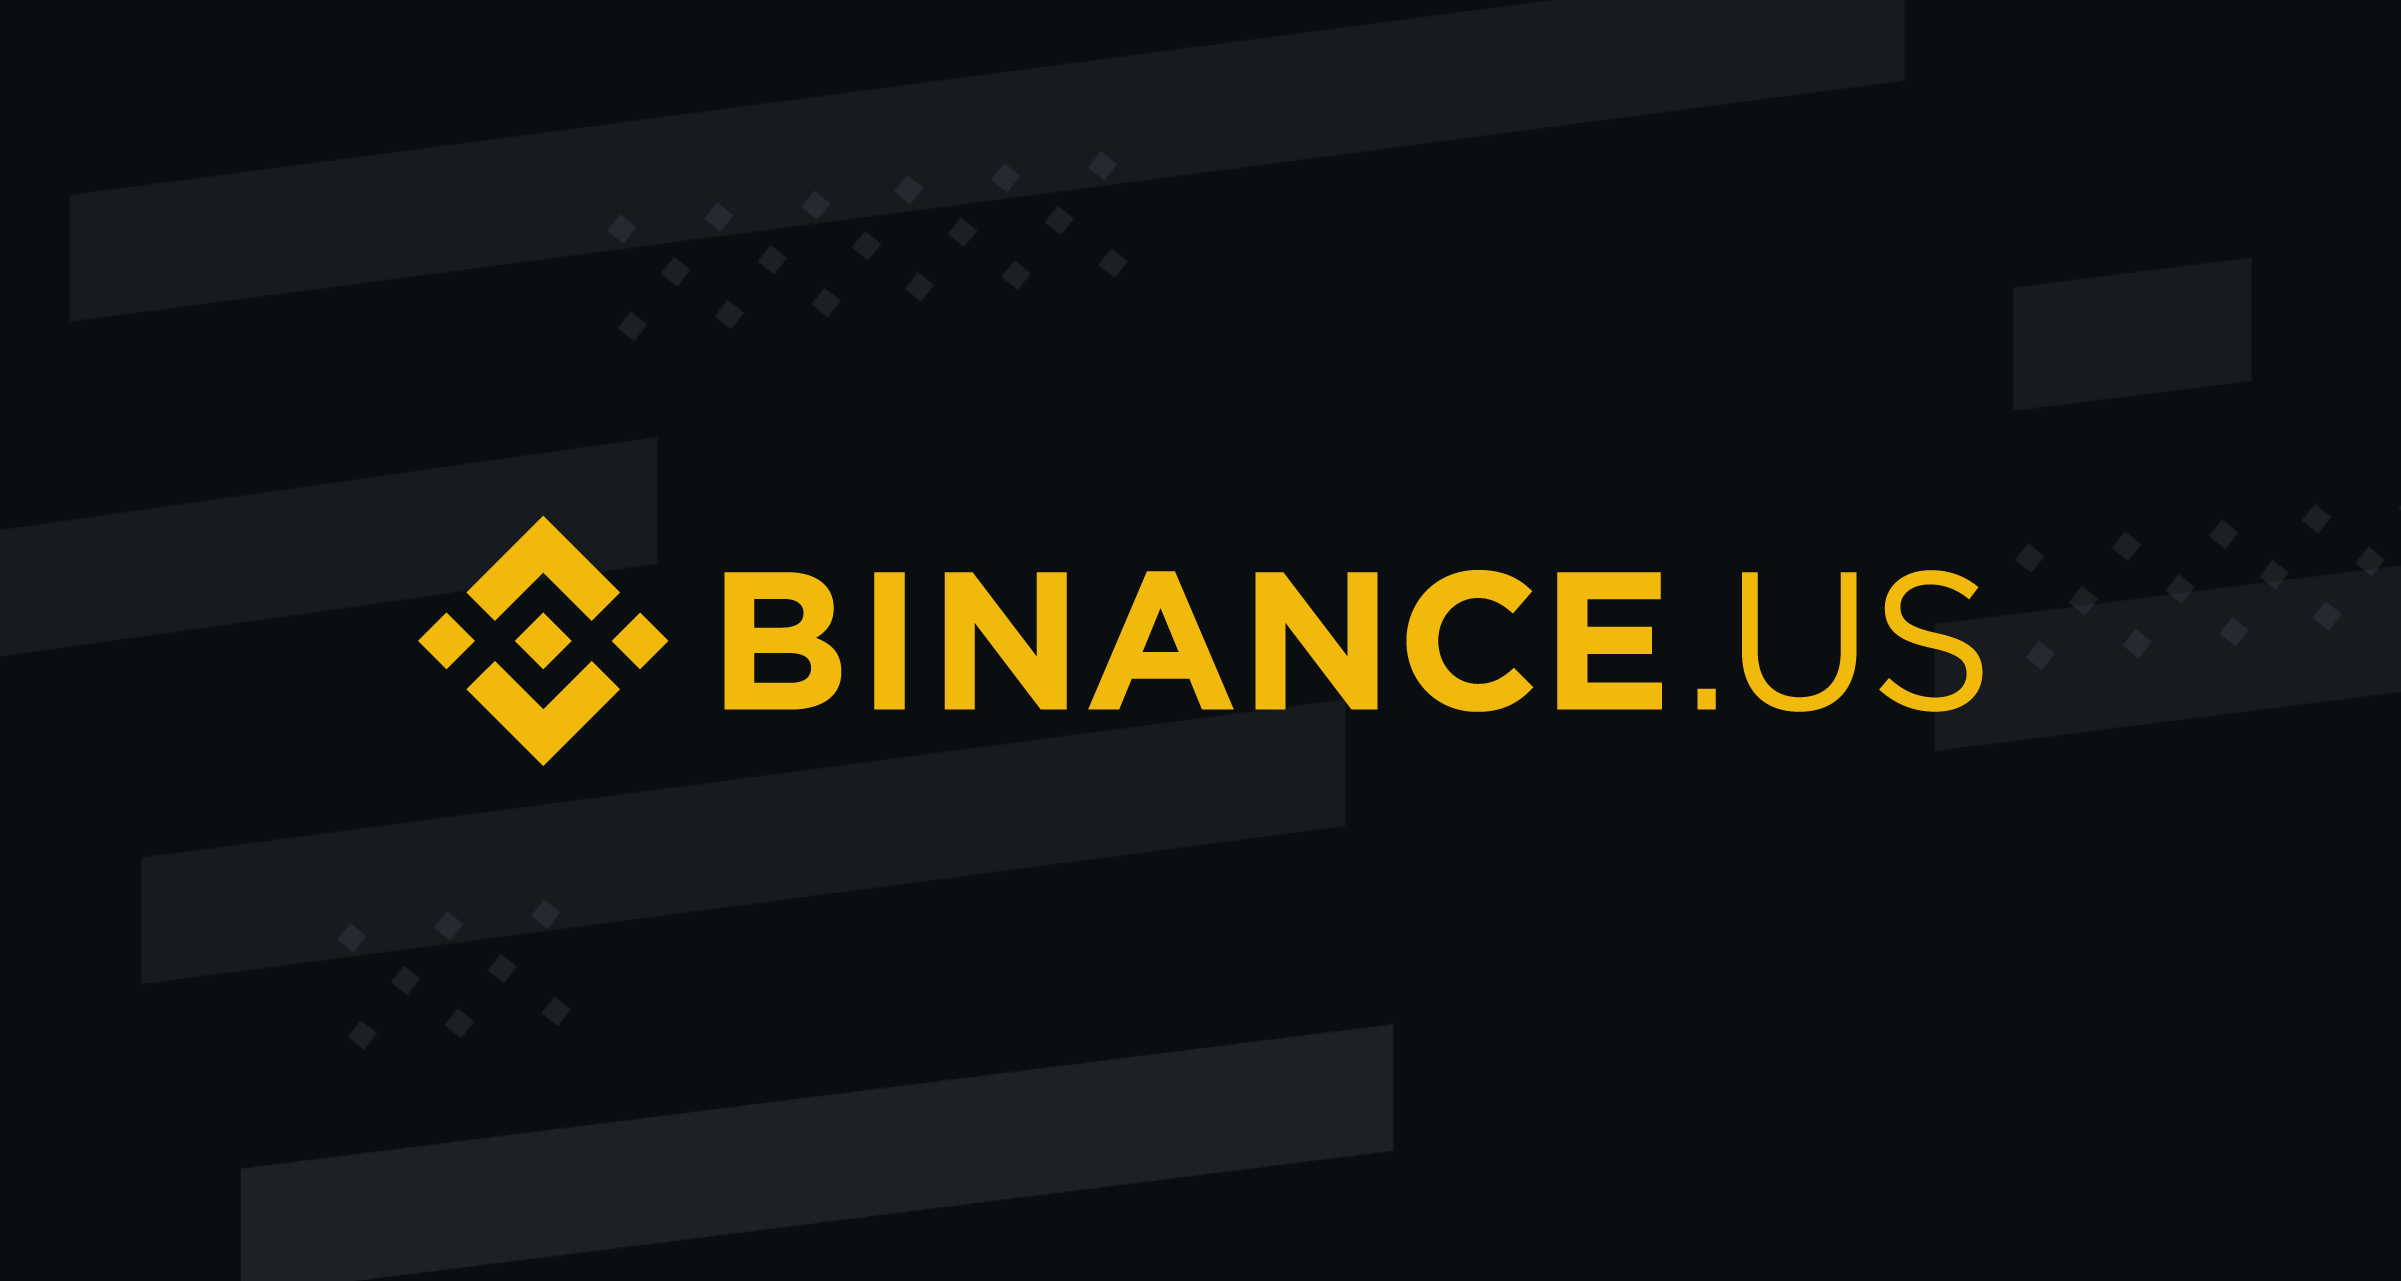 Binance.US banner and logo